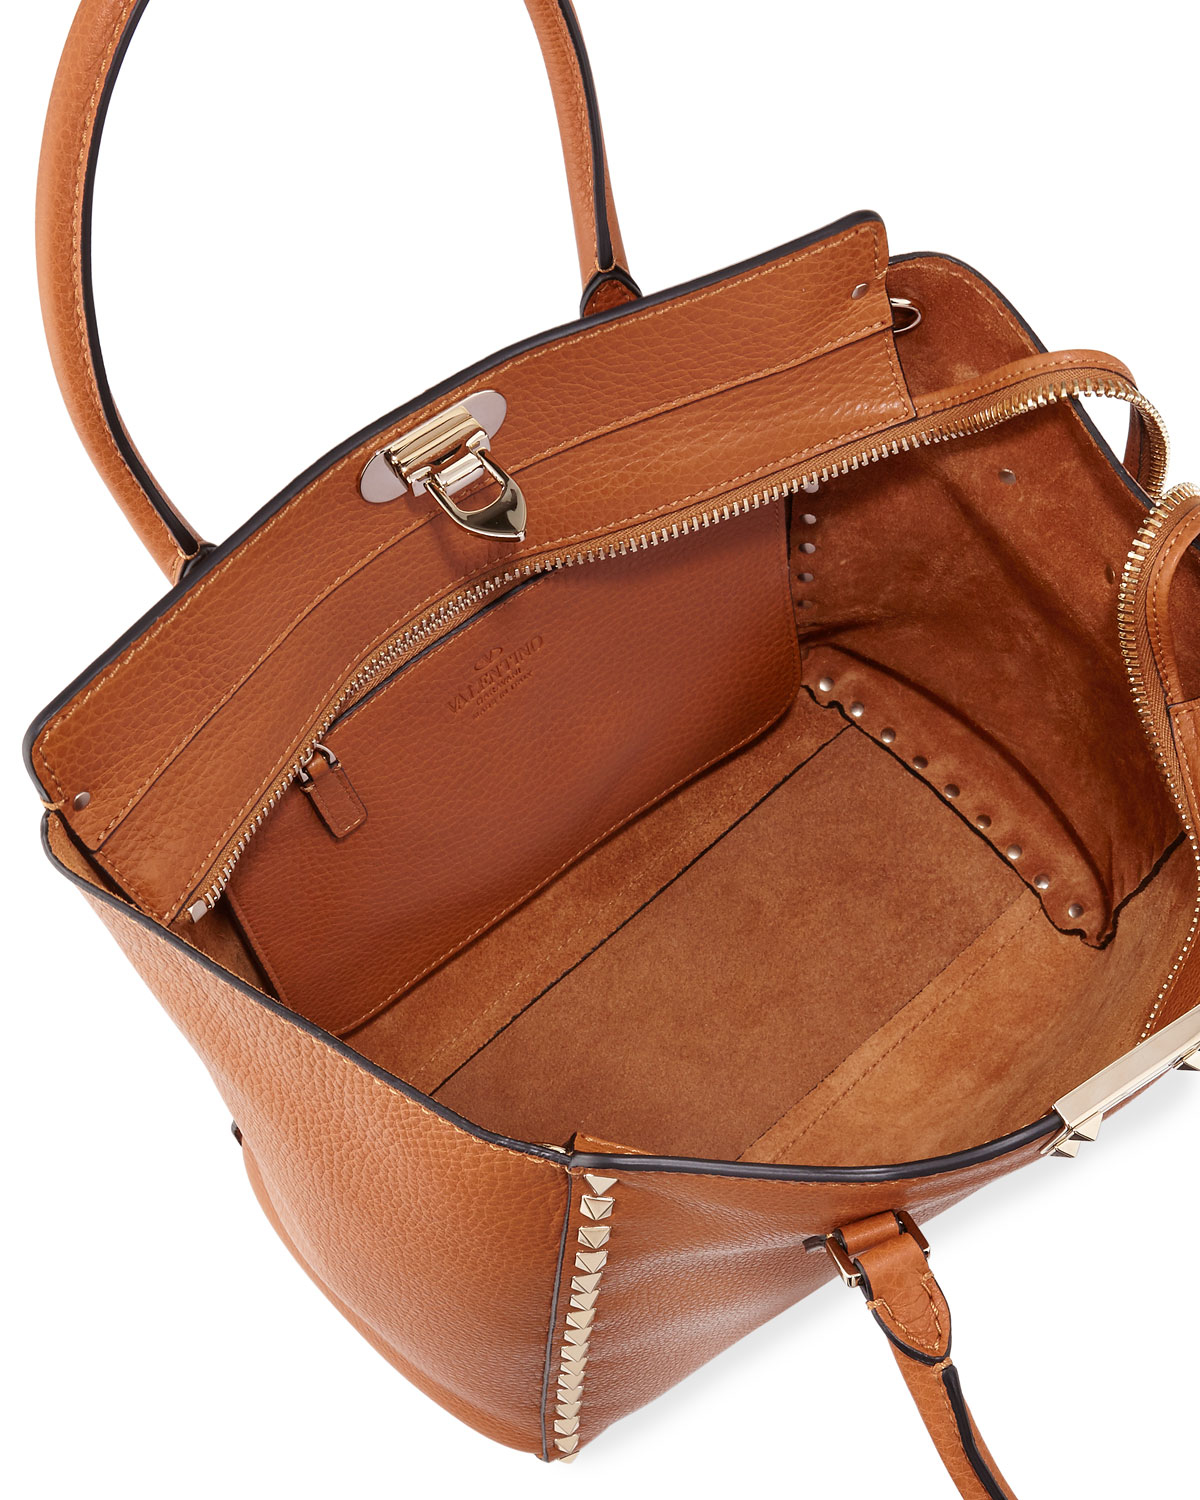 Valentino Rockstud Medium Leather Tote Bag in Tan (Brown) - Lyst